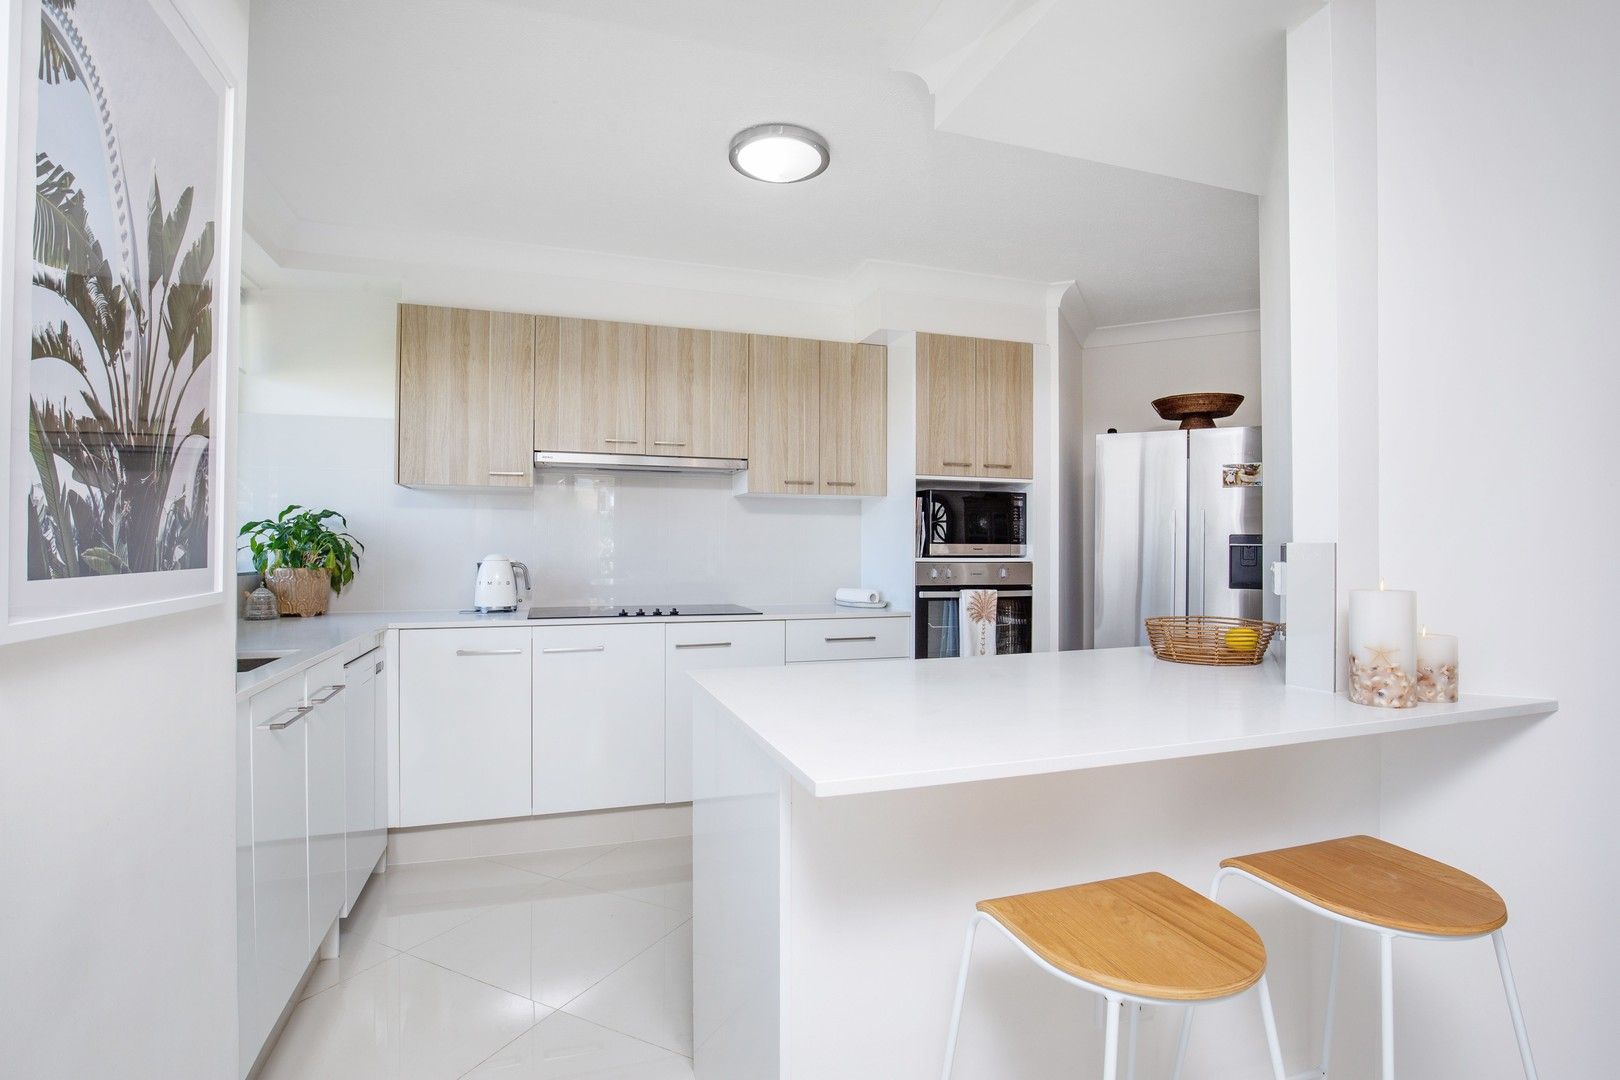 2 bedrooms Apartment / Unit / Flat in 3554 MAIN BEACH PARADE MAIN BEACH QLD, 4217